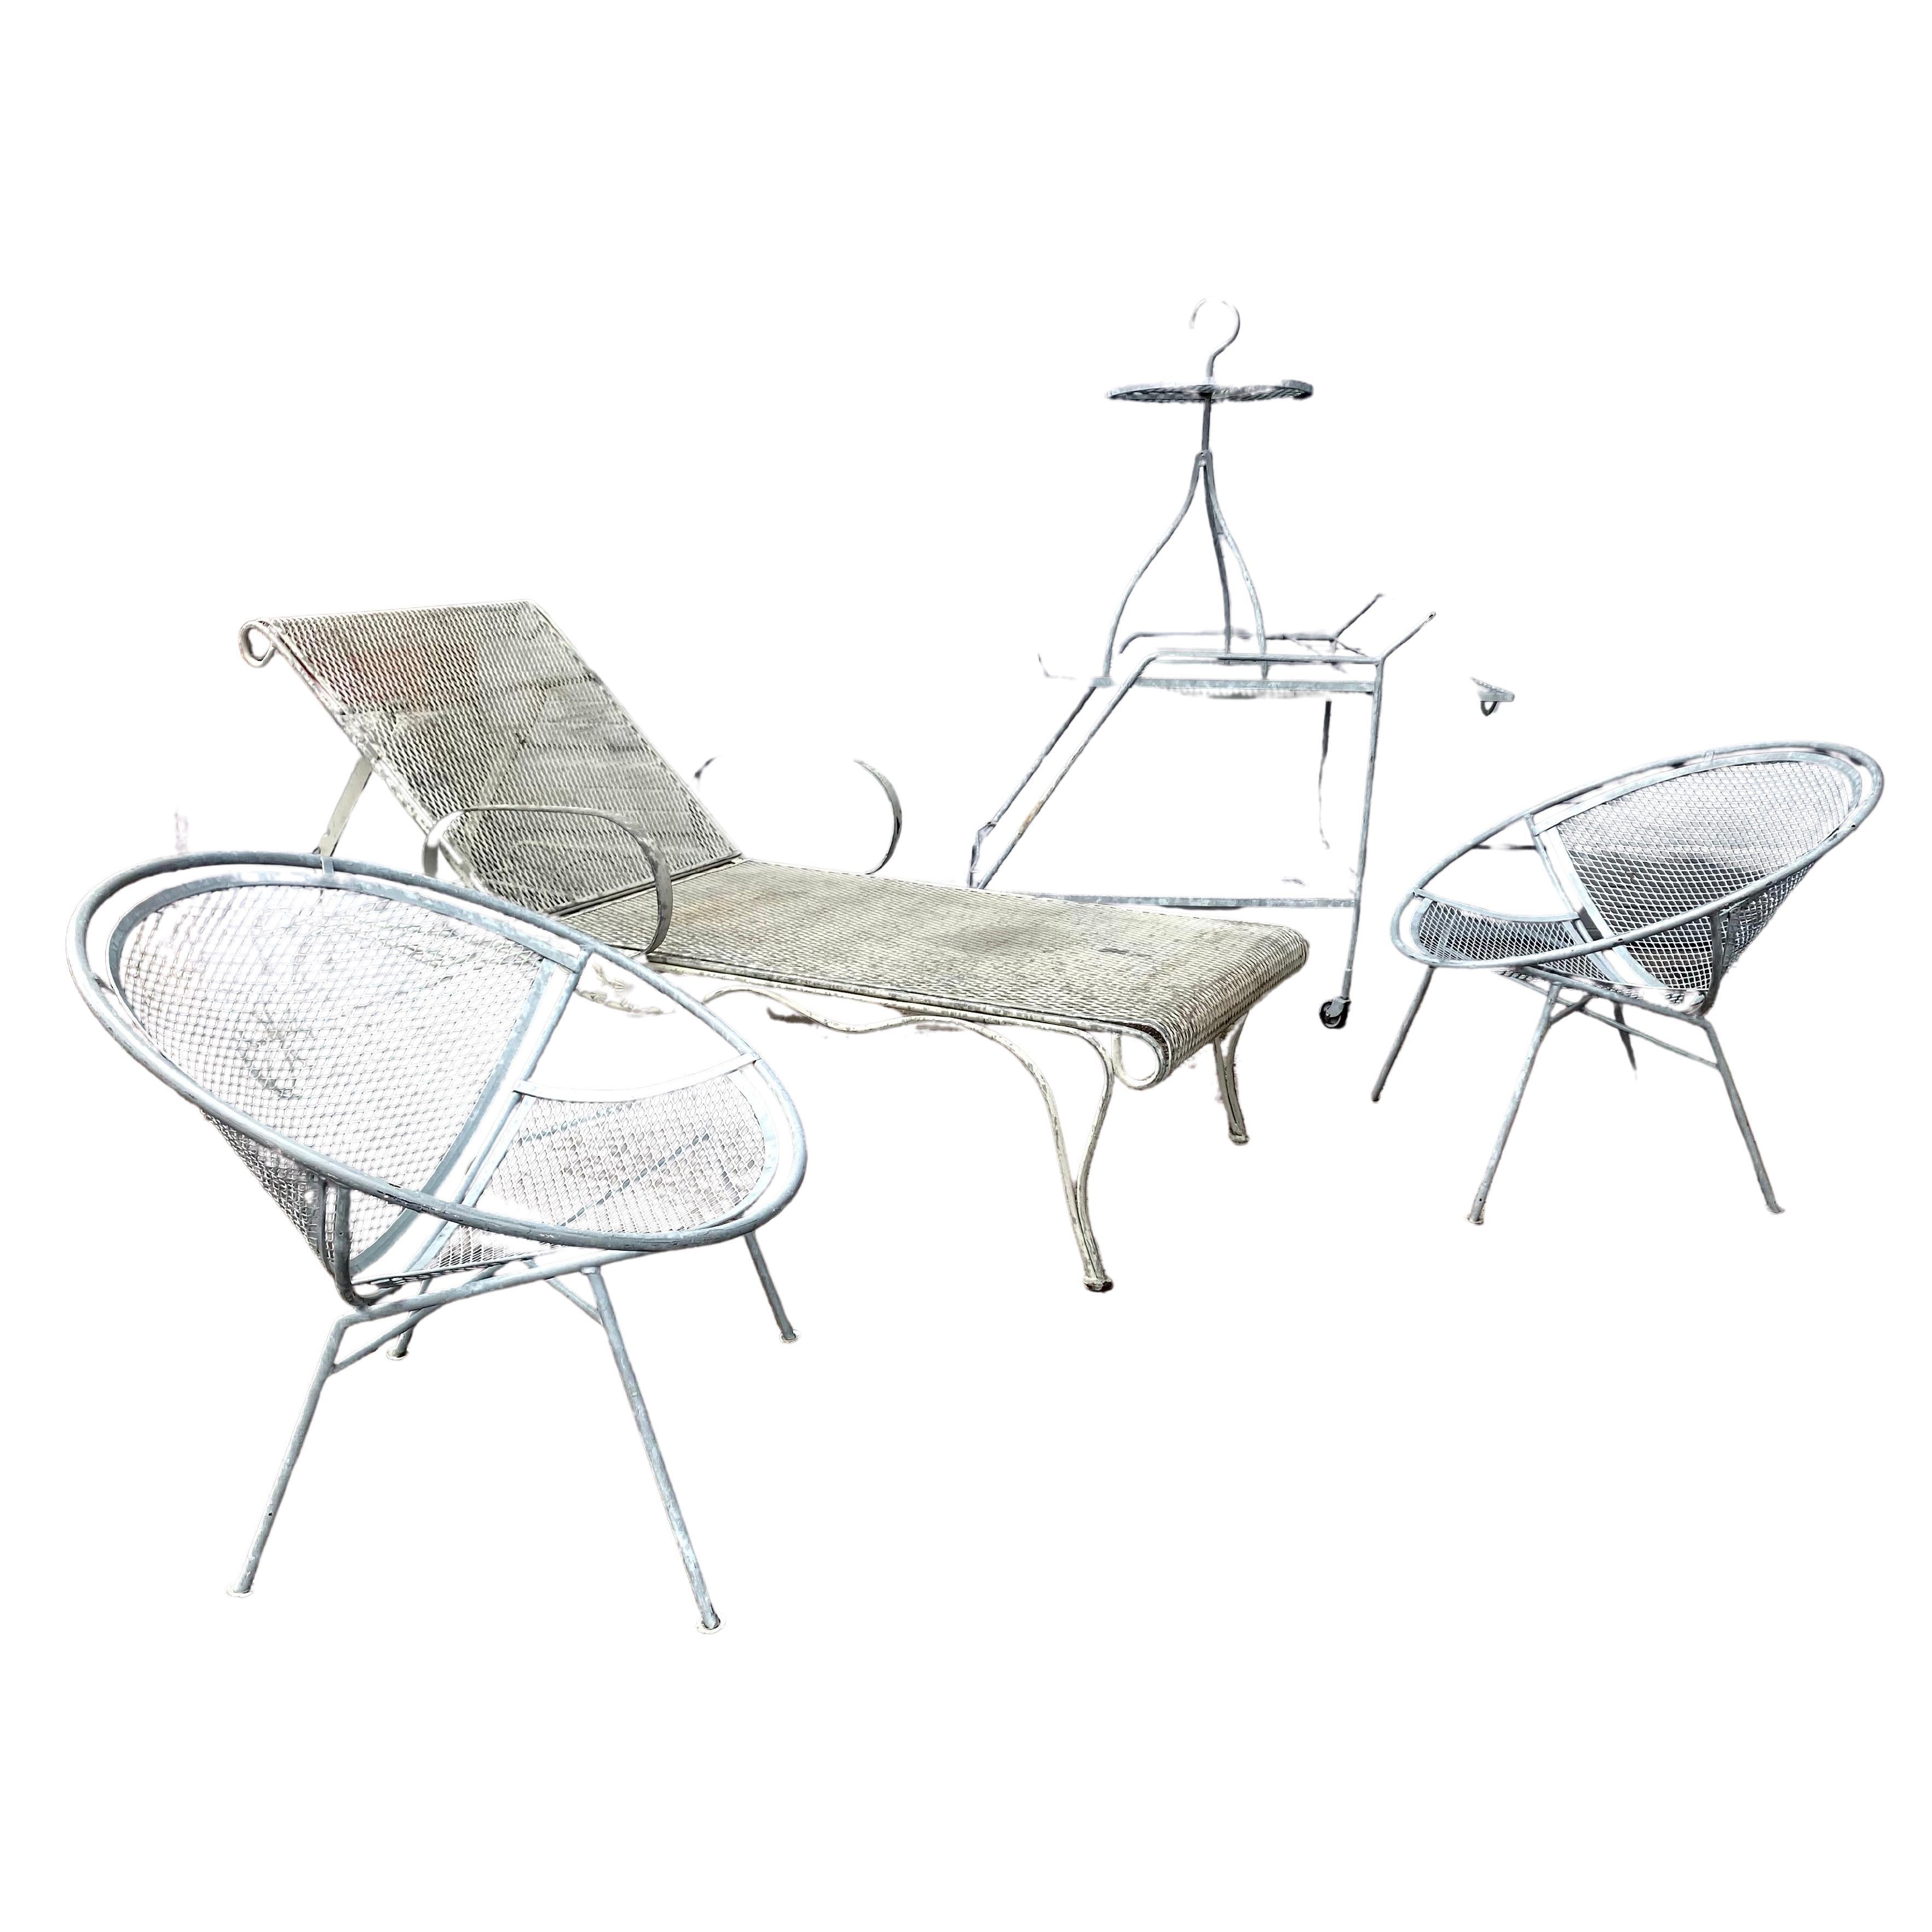 5 Piece's Salterini / Tempestini Garden Furnishings.Radar Chairs, Chaise, Cart For Sale